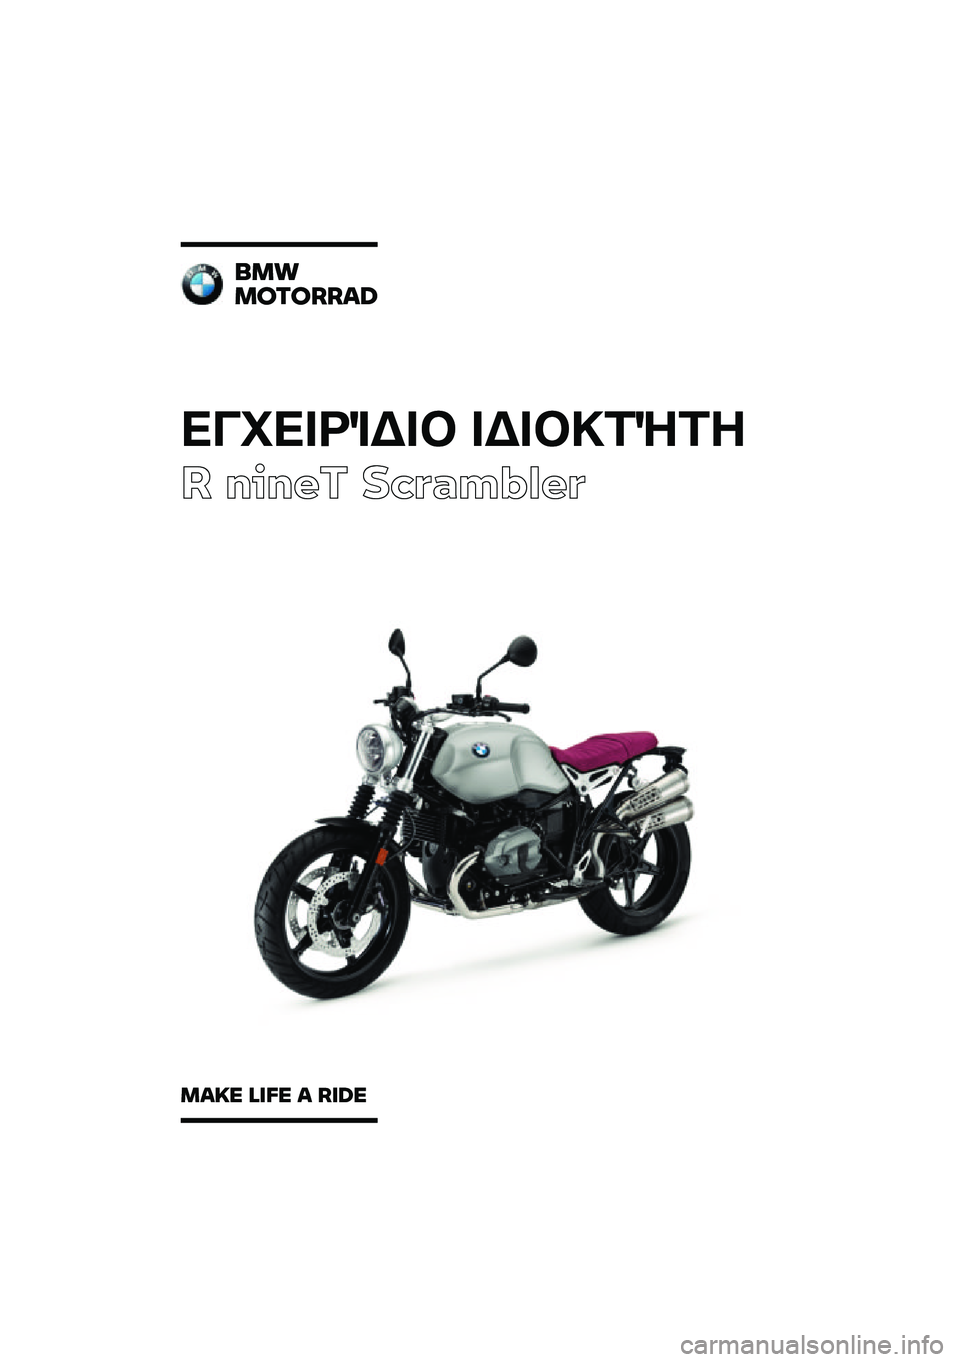 BMW MOTORRAD R NINE T SCRAMBLER 2020  Εγχειρίδιο ιδιοκτήτη (in Greek) ��������\b��	 ��\b��	�
��\f��
� ����� ��\b�	�
��\f�
��	
���
�������\b�	
��\b�
� �\f�
�� �\b ��
�	� 